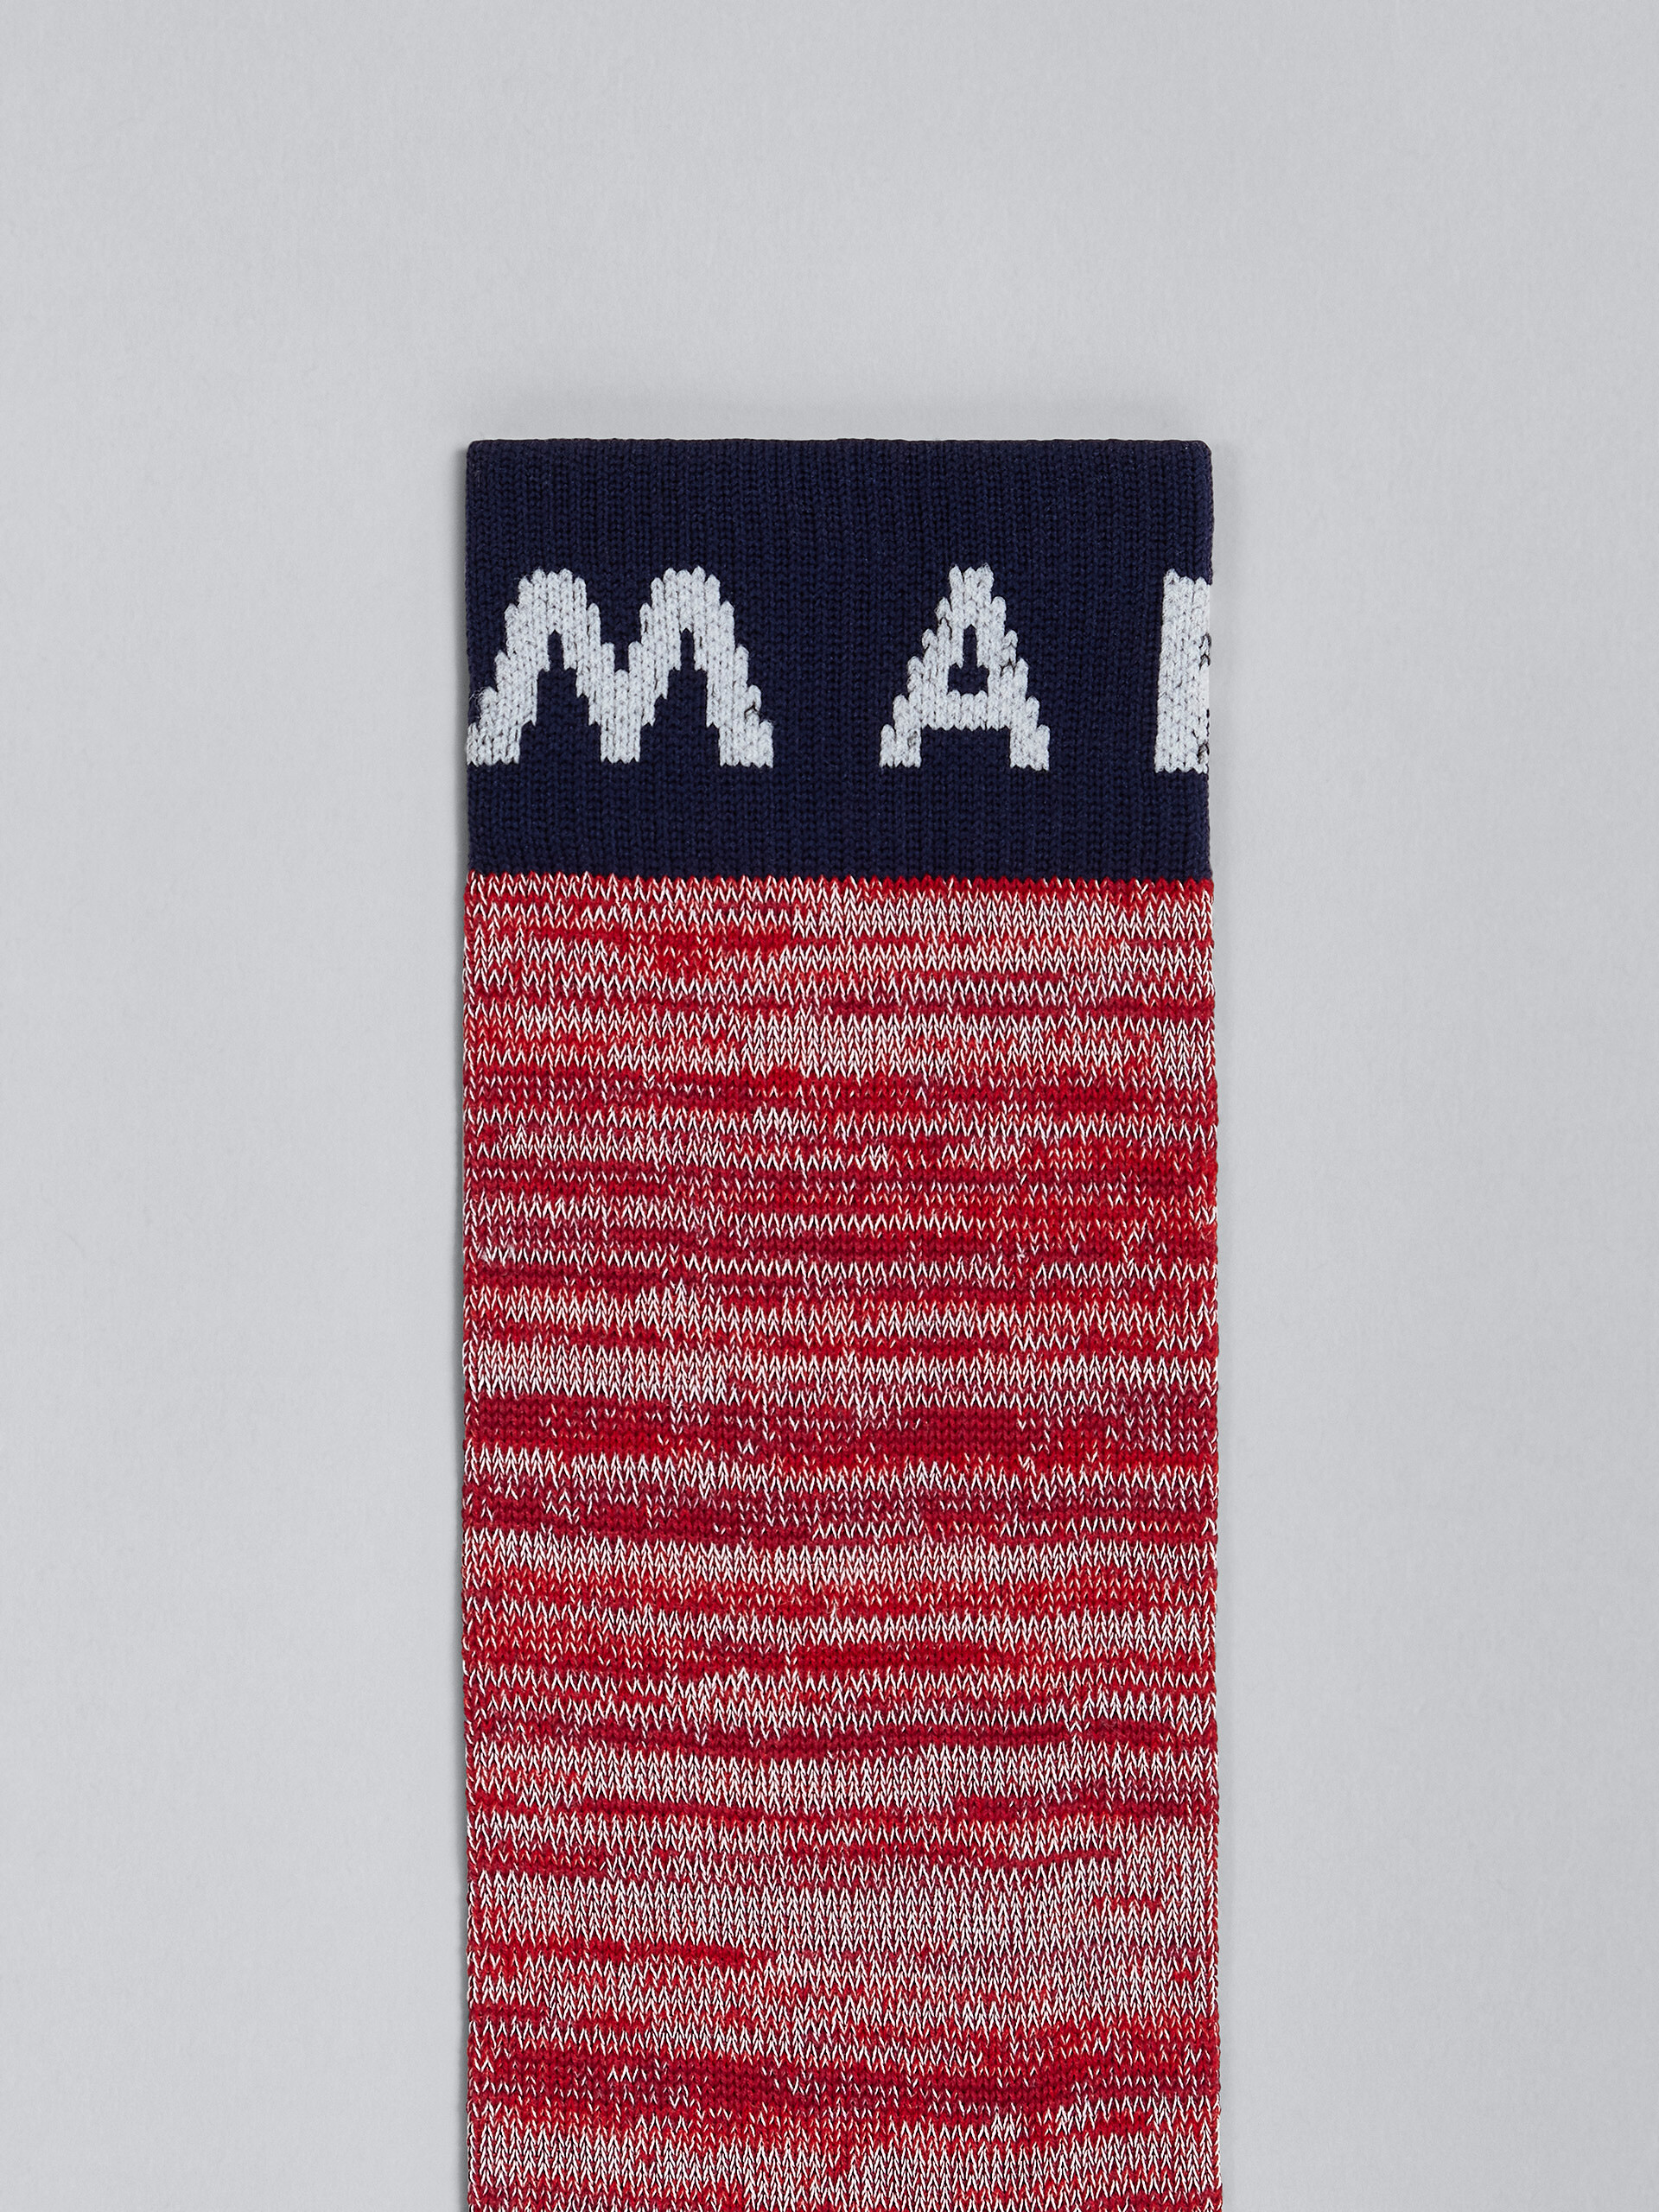 Red mouliné cotton and nylon socks - Socks - Image 3